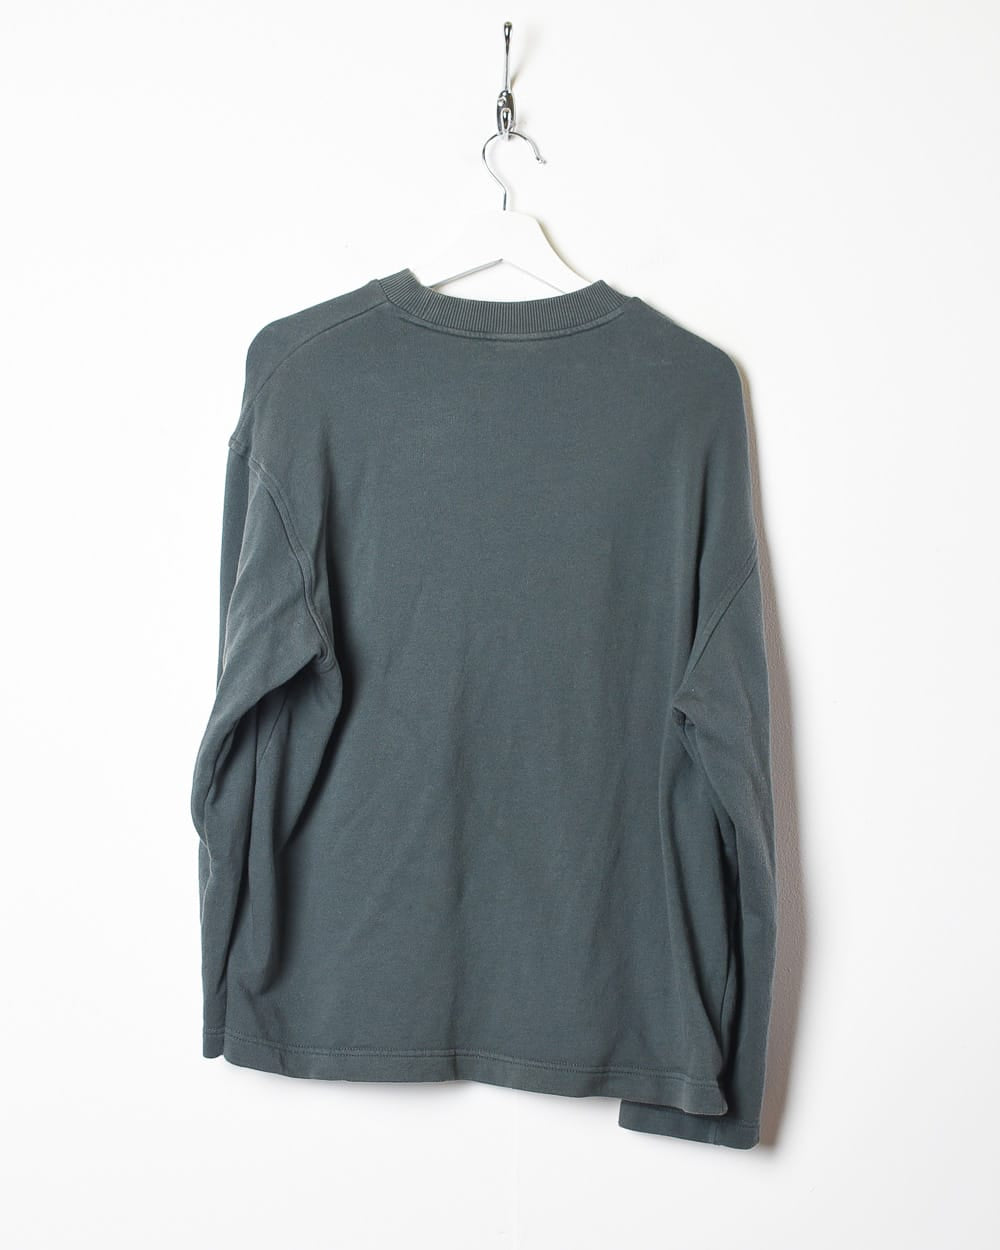 Grey Fila Sweatshirt - Small